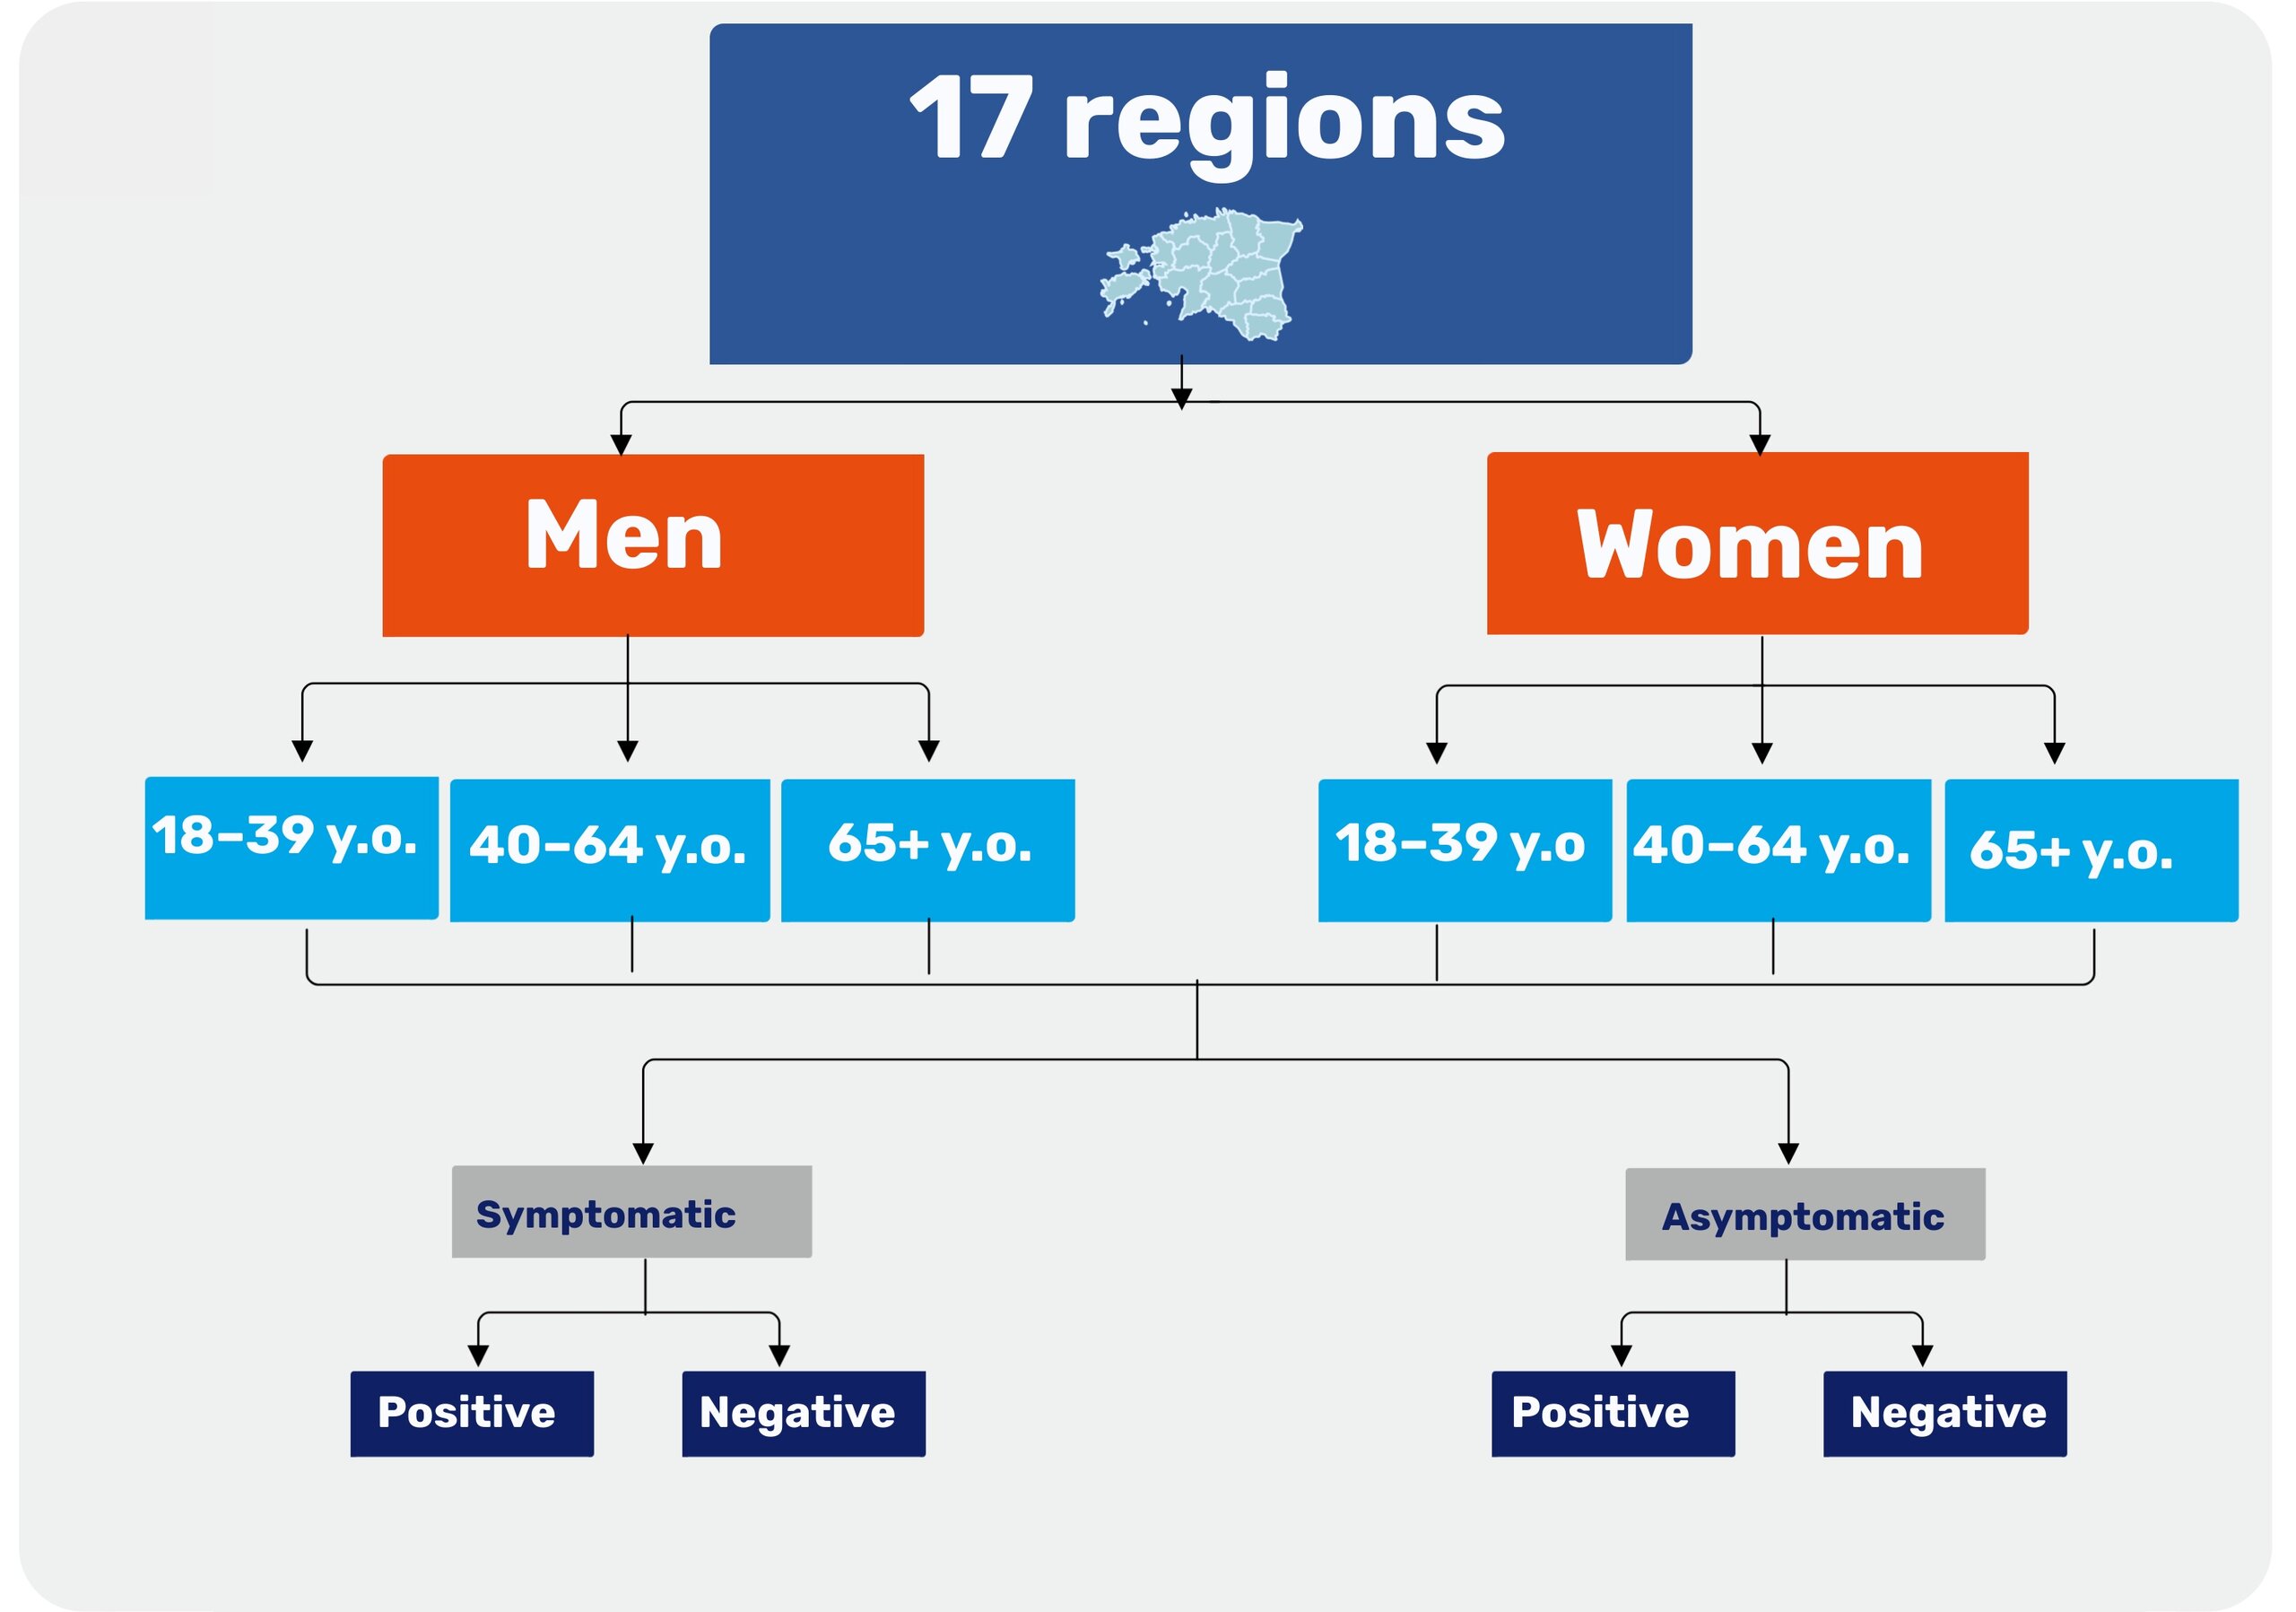 Overview of the prevalence study design in Estonia